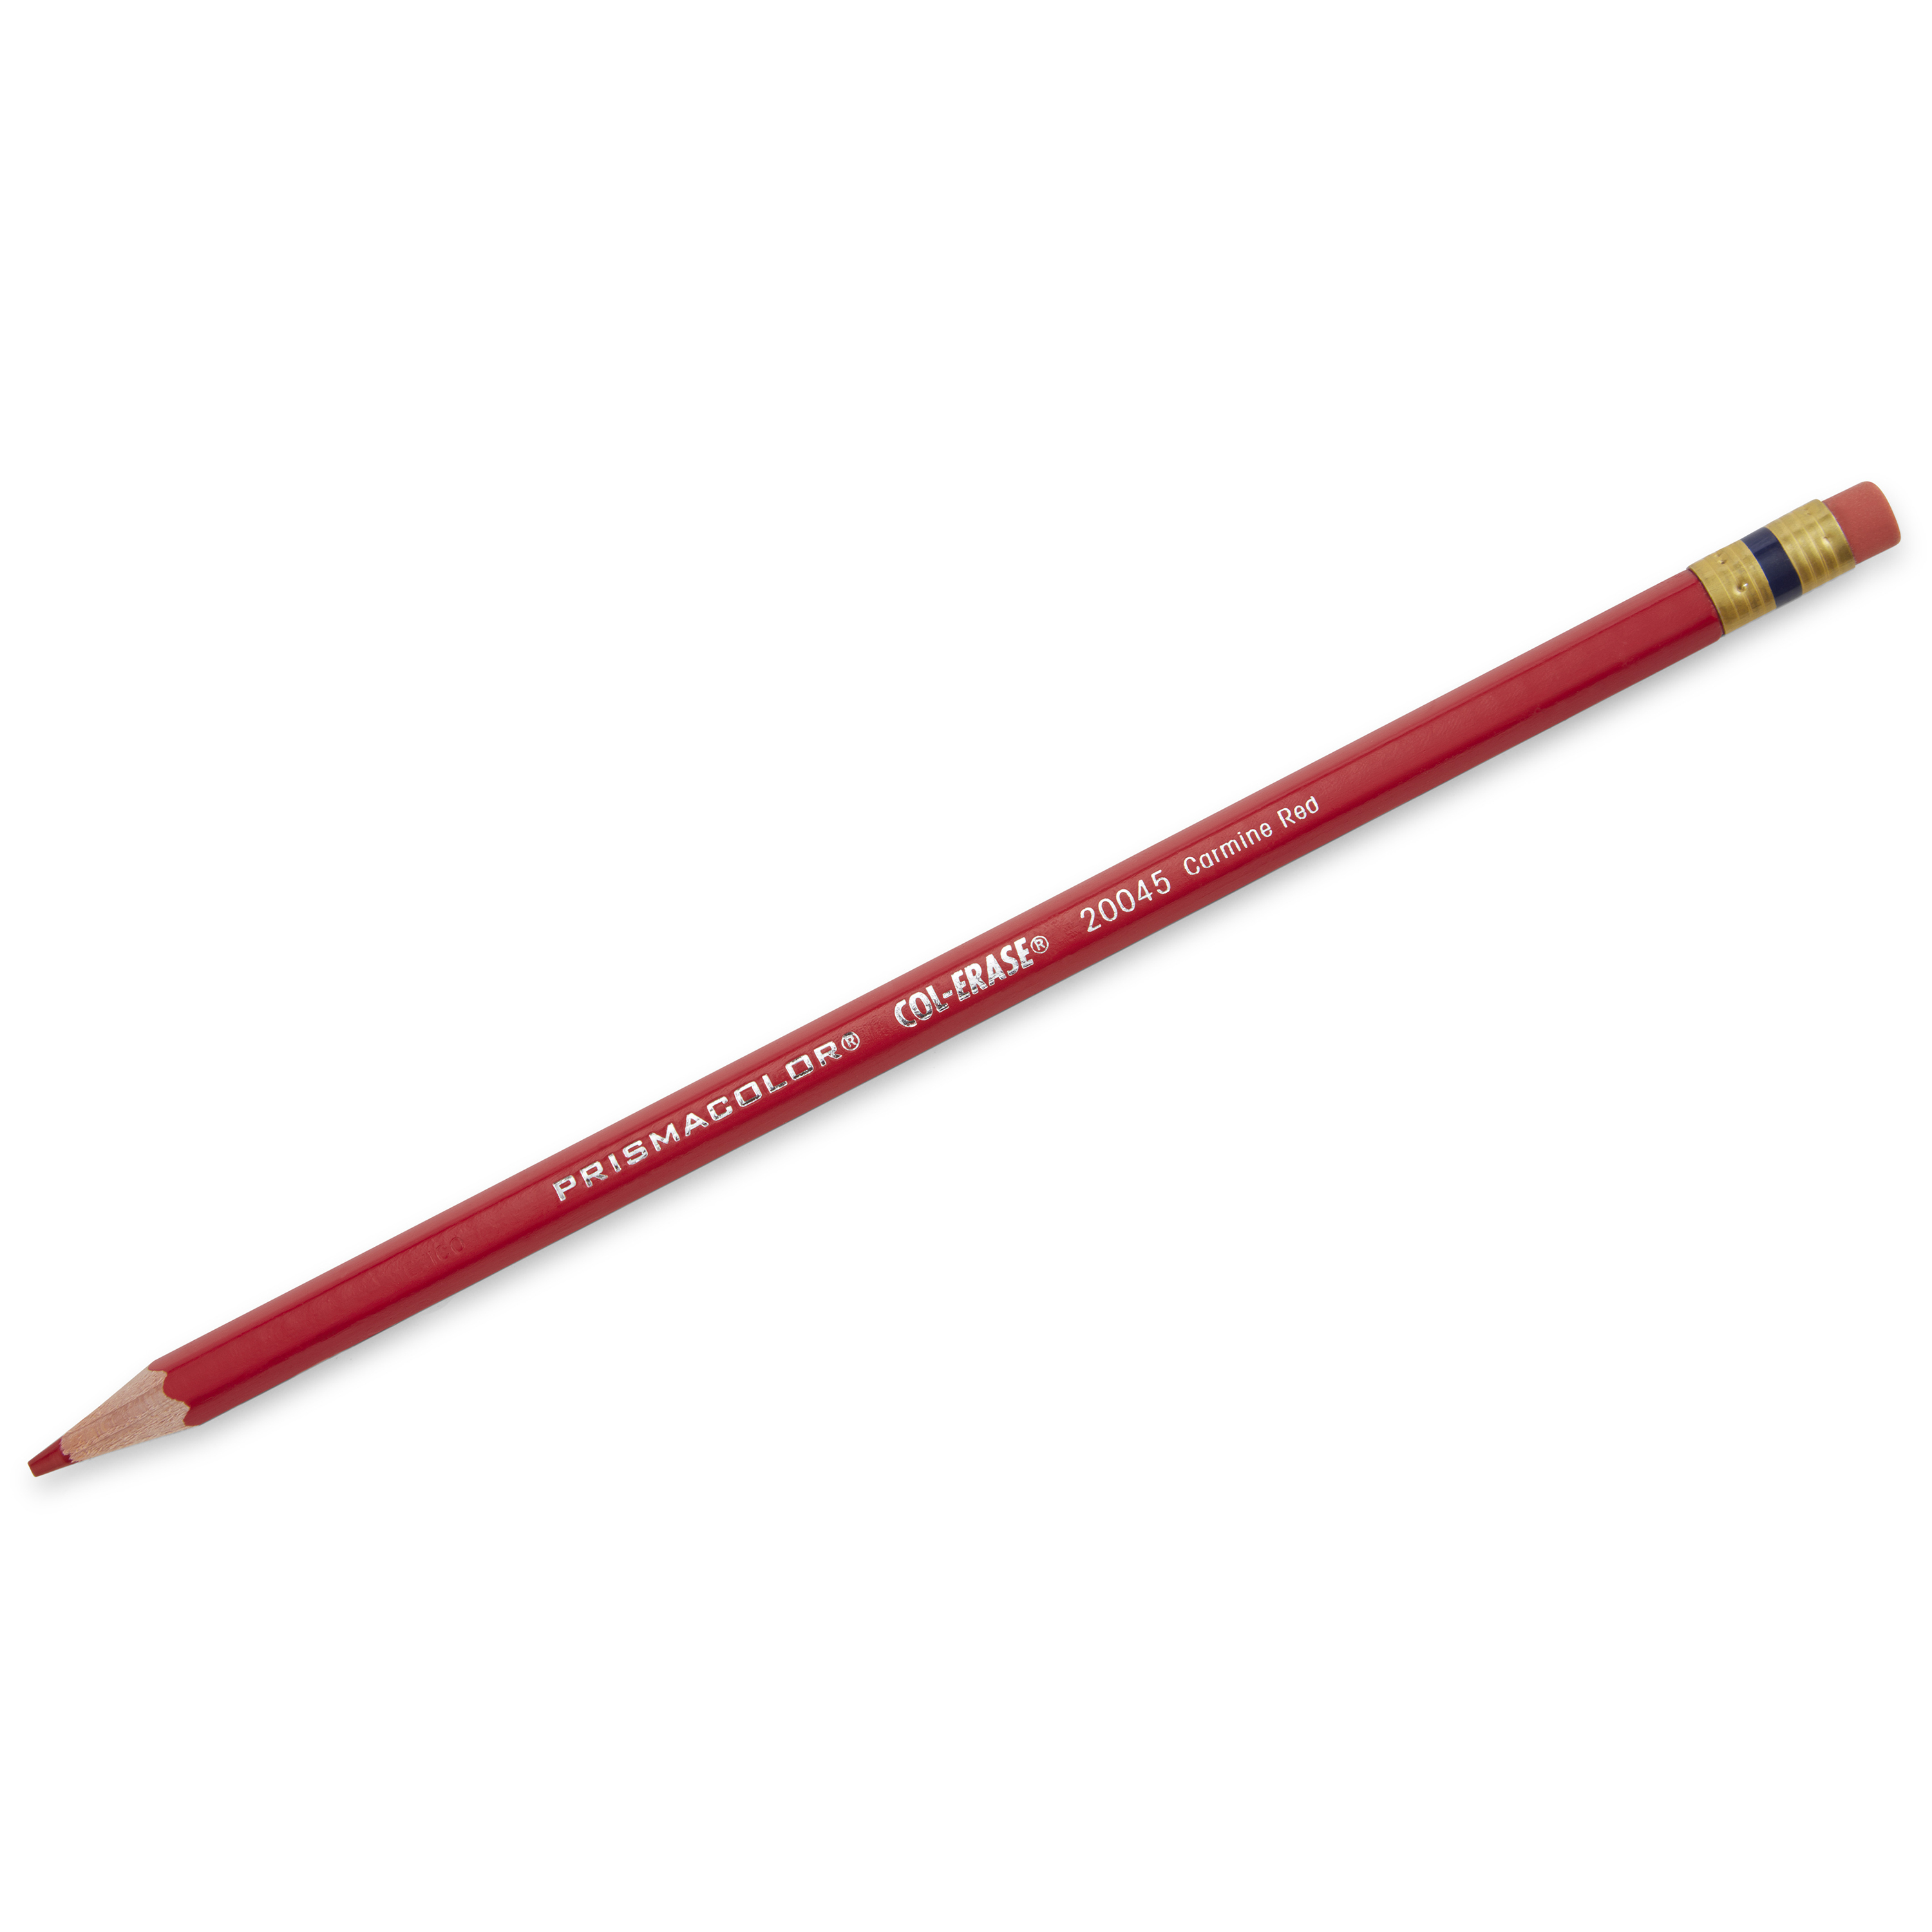 Prismacolor Col-Erase Erasable Colored Pencils, Carmine Red, Box of 12 - image 1 of 3